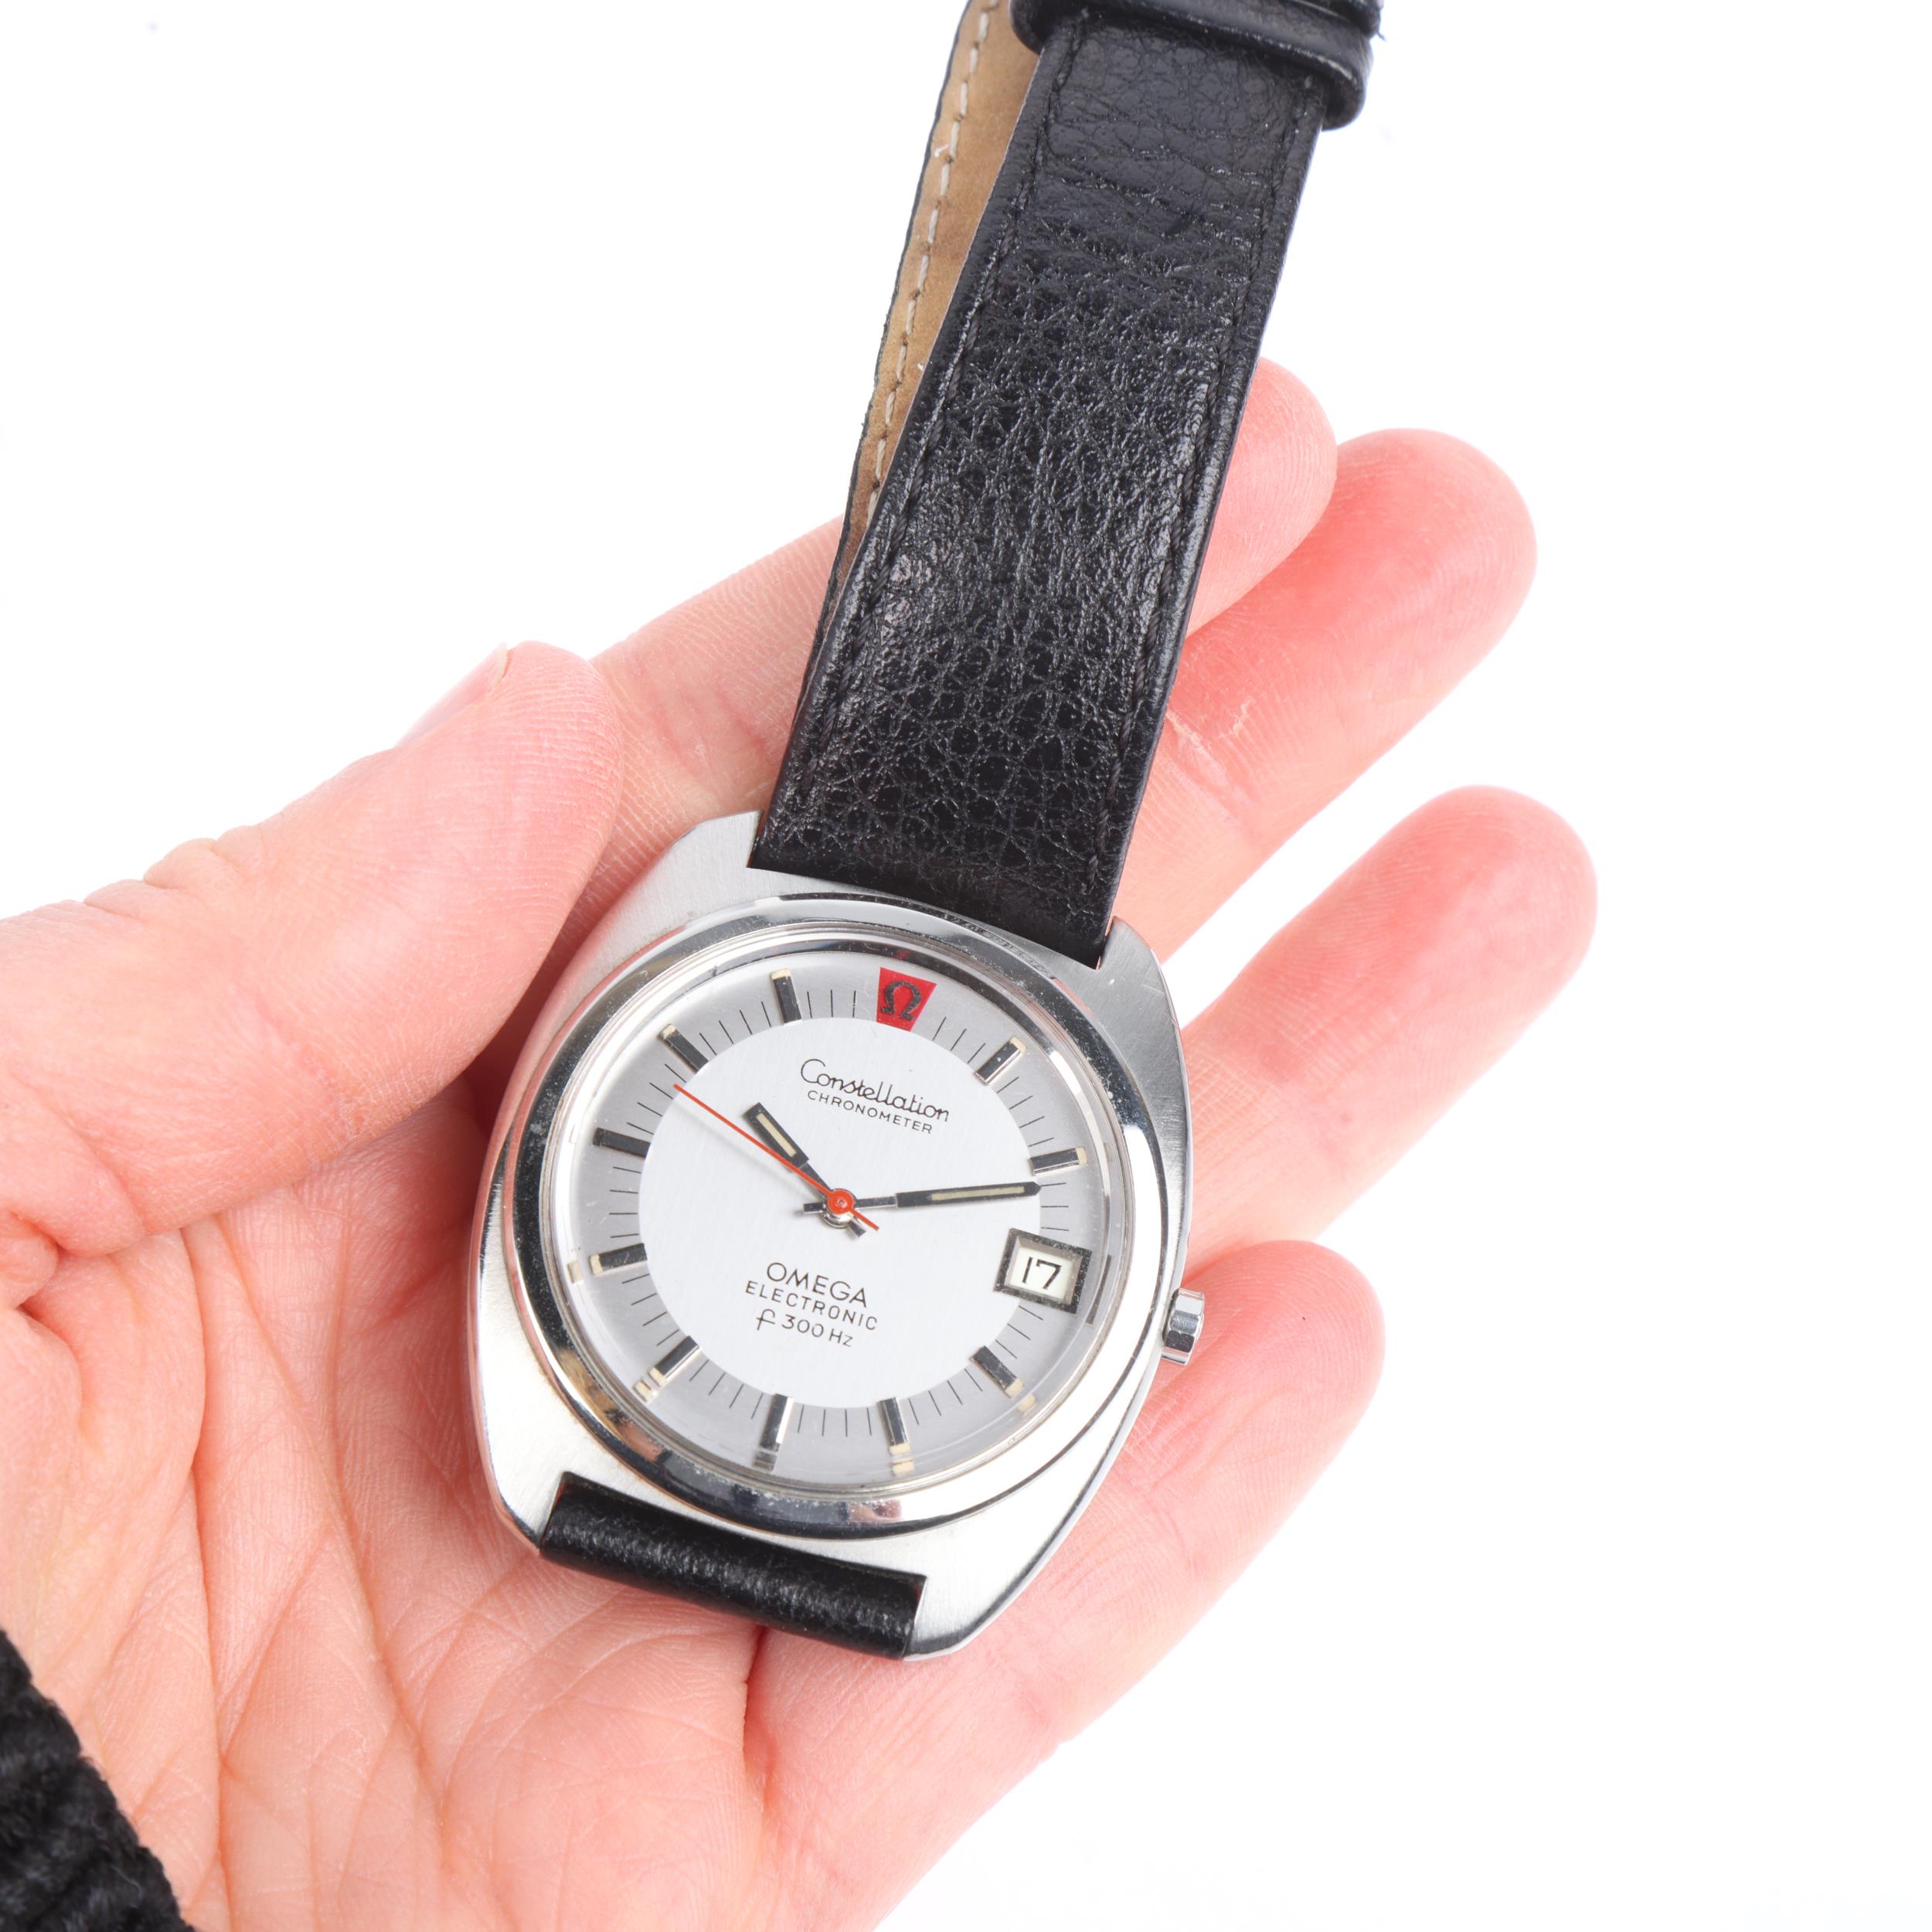 OMEGA - a stainless steel Constellation chronometer electronic f300Hz quartz calendar wristwatch, - Image 5 of 5